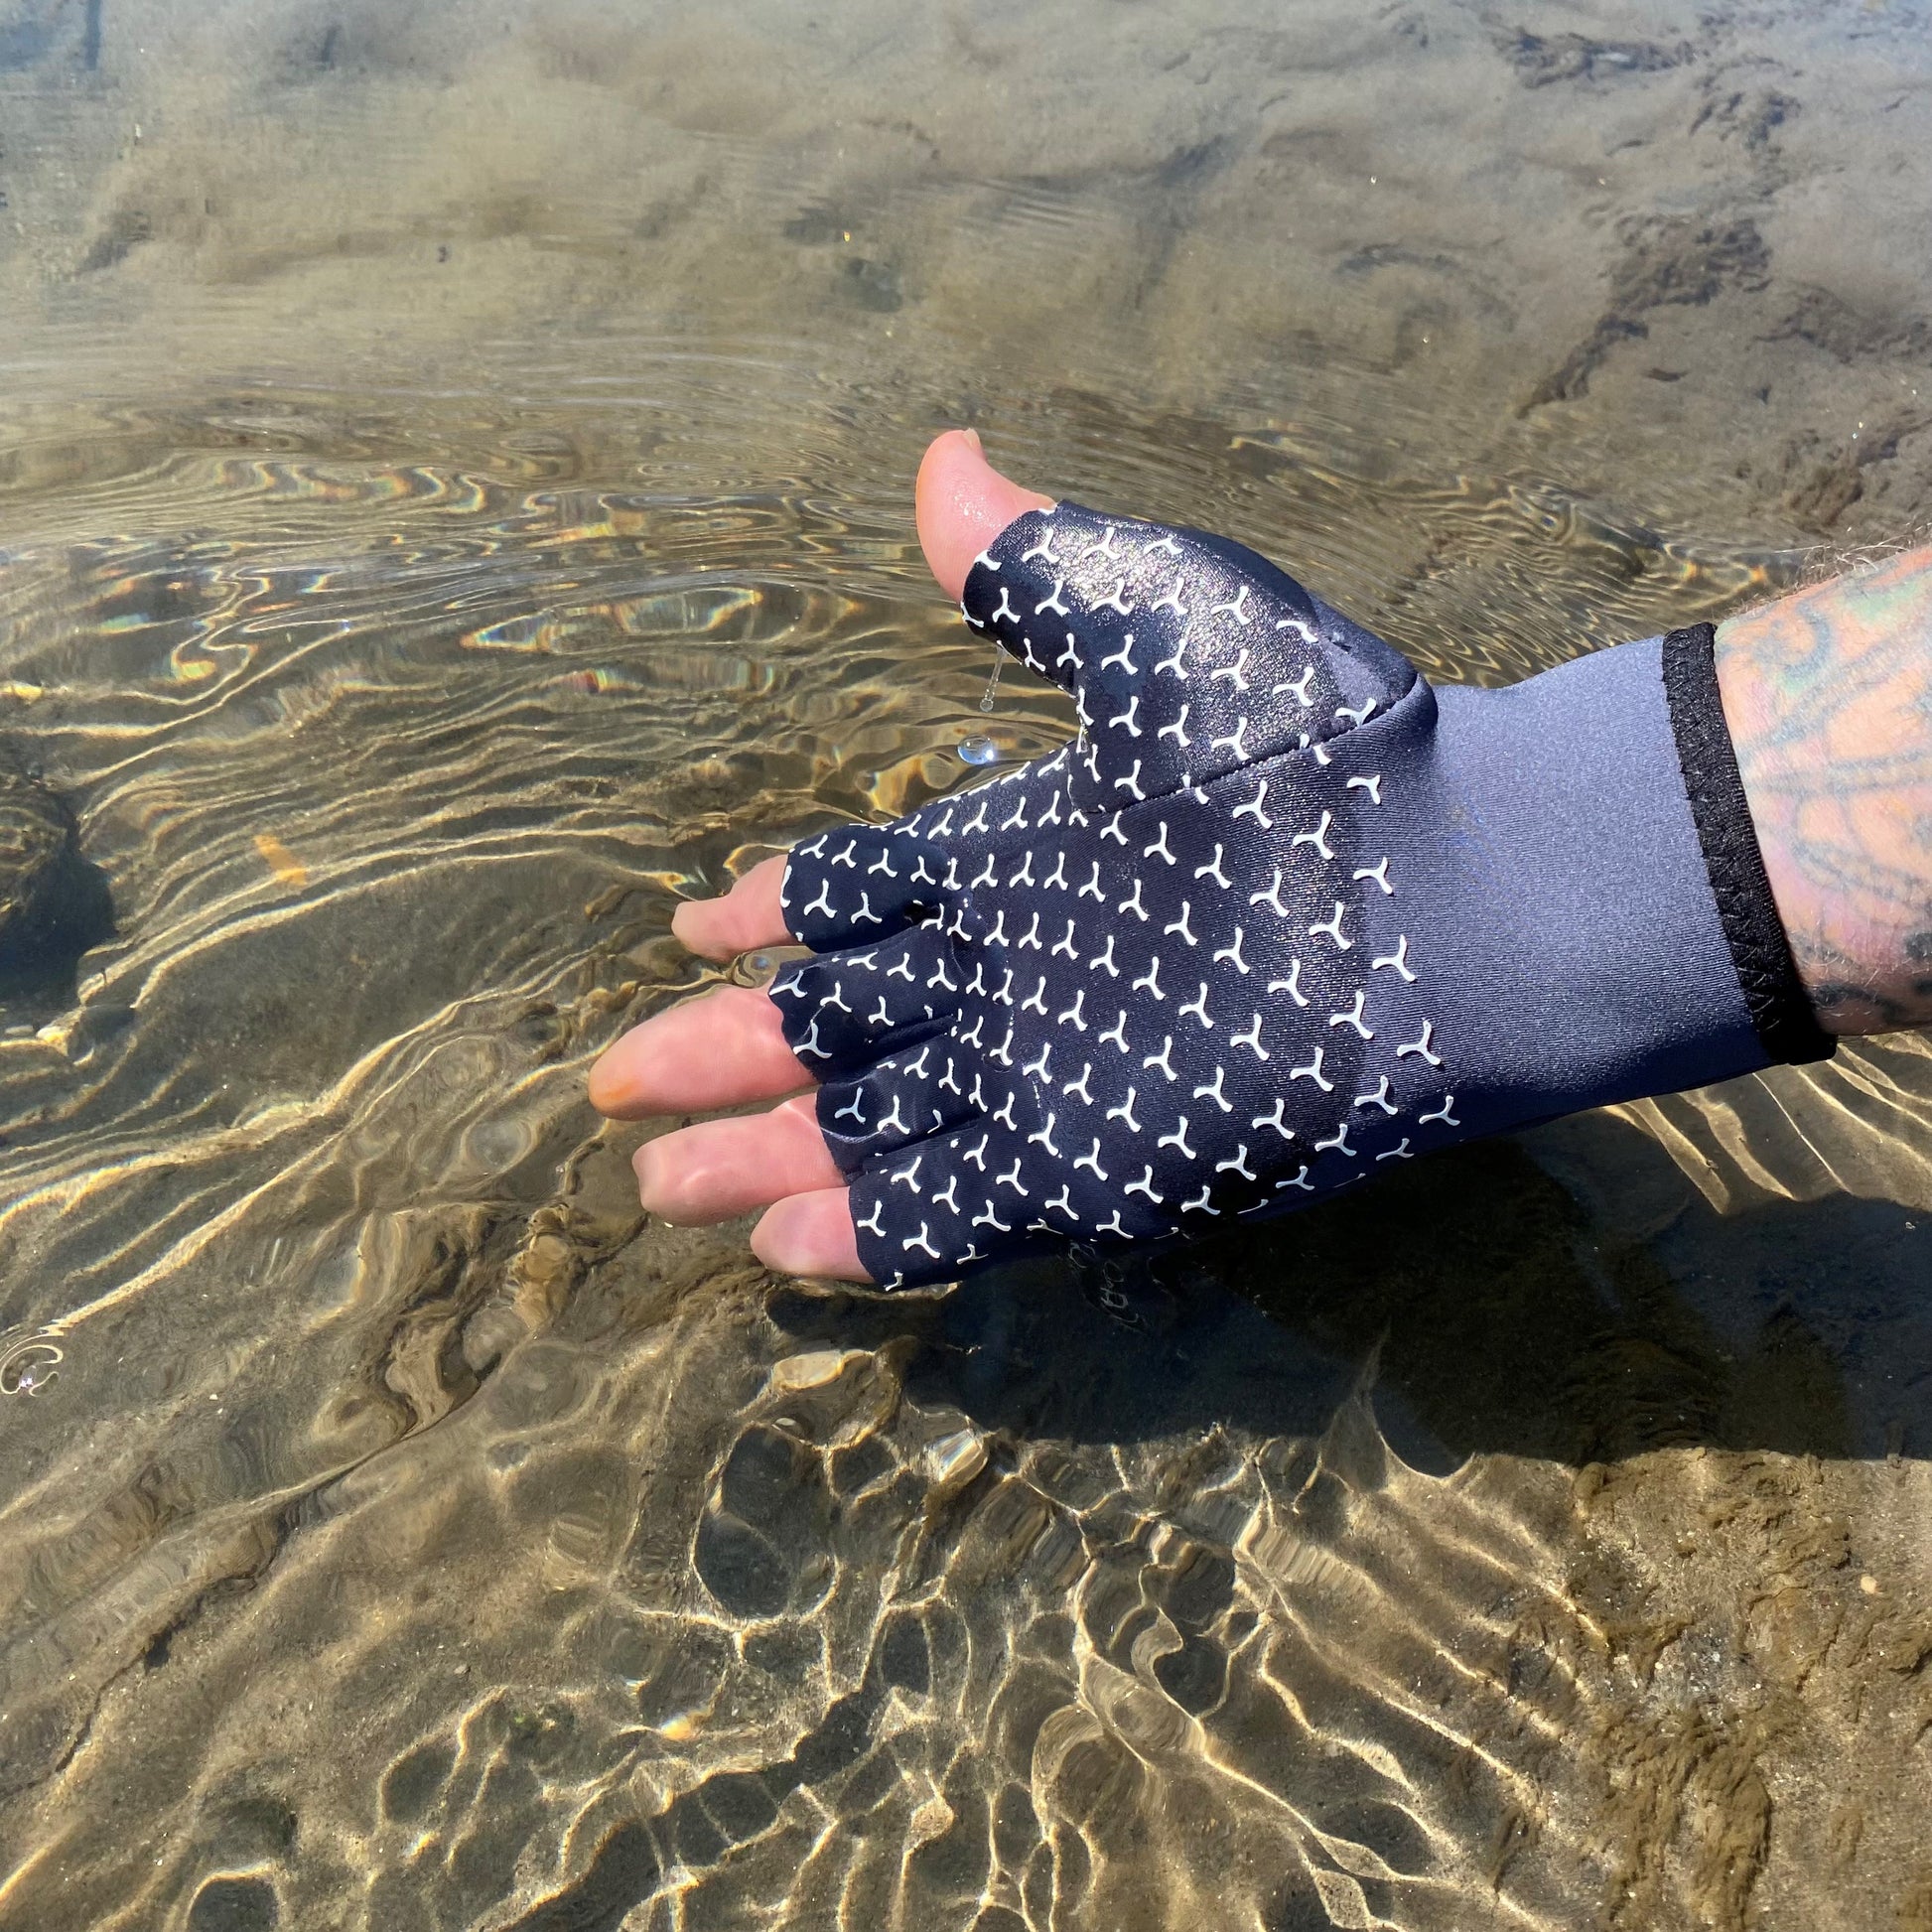 ZKSXOA Winter Thermal Gloves, Fingerless Mittens, Warm Polar Fleece  Mittens,Convertible Fingerless Gloves, Half Finger Work Fishing Driving  Running